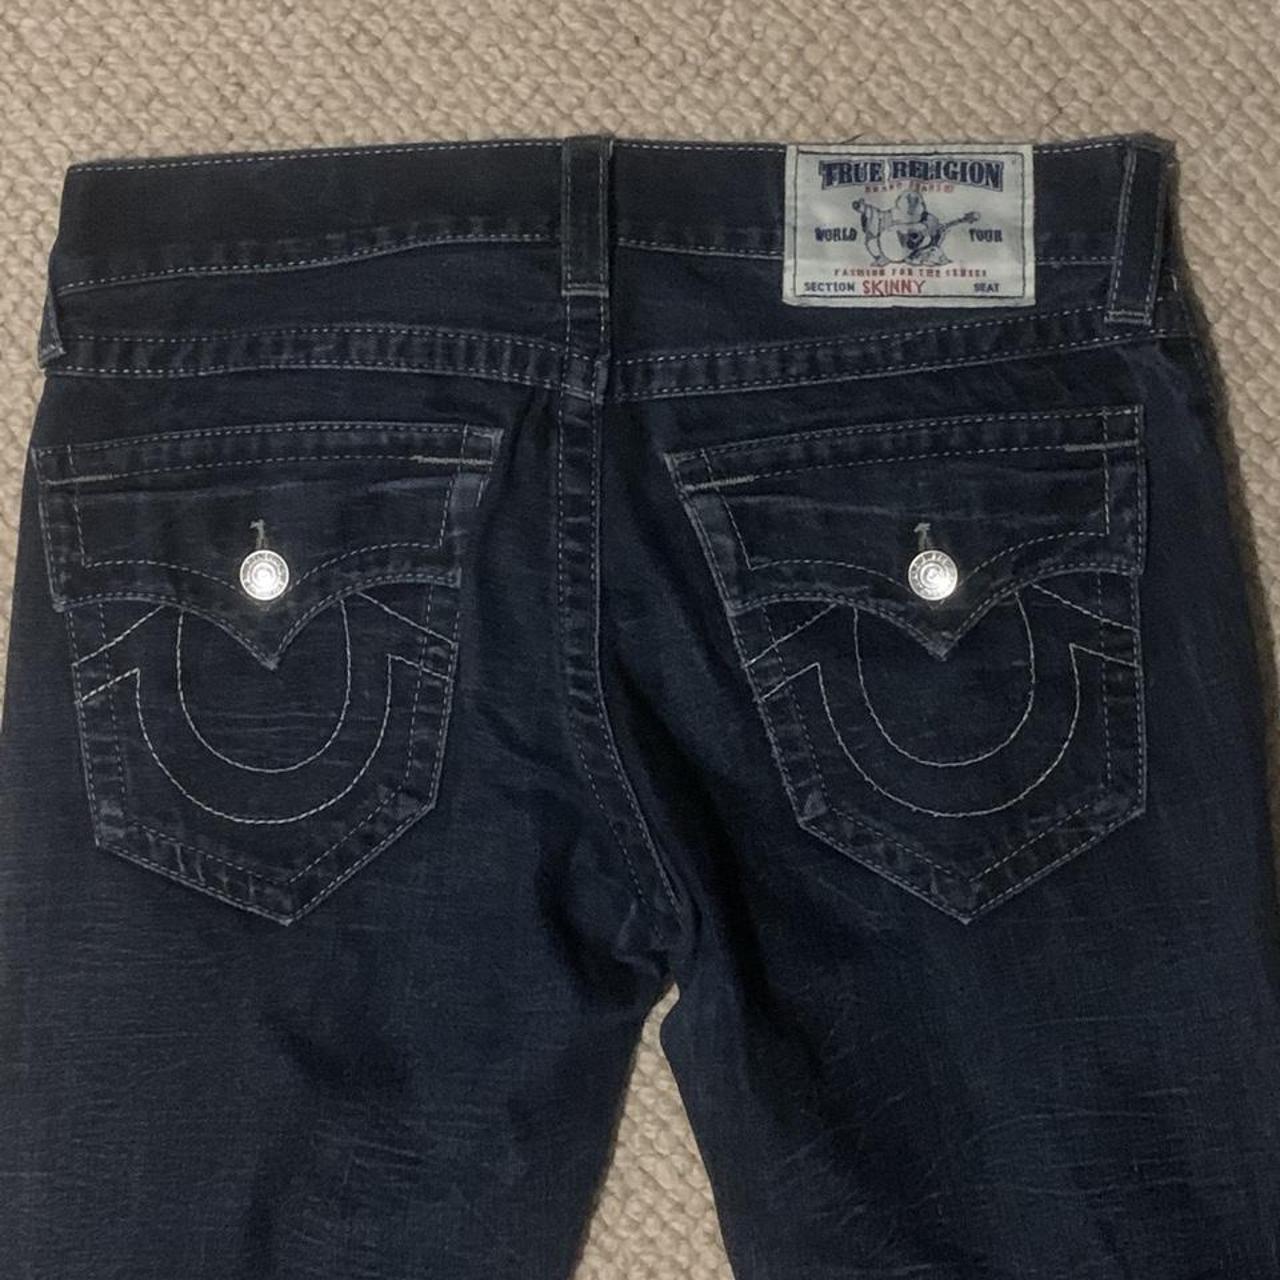 True religion navy skinny jeans 31”, in great condition - Depop